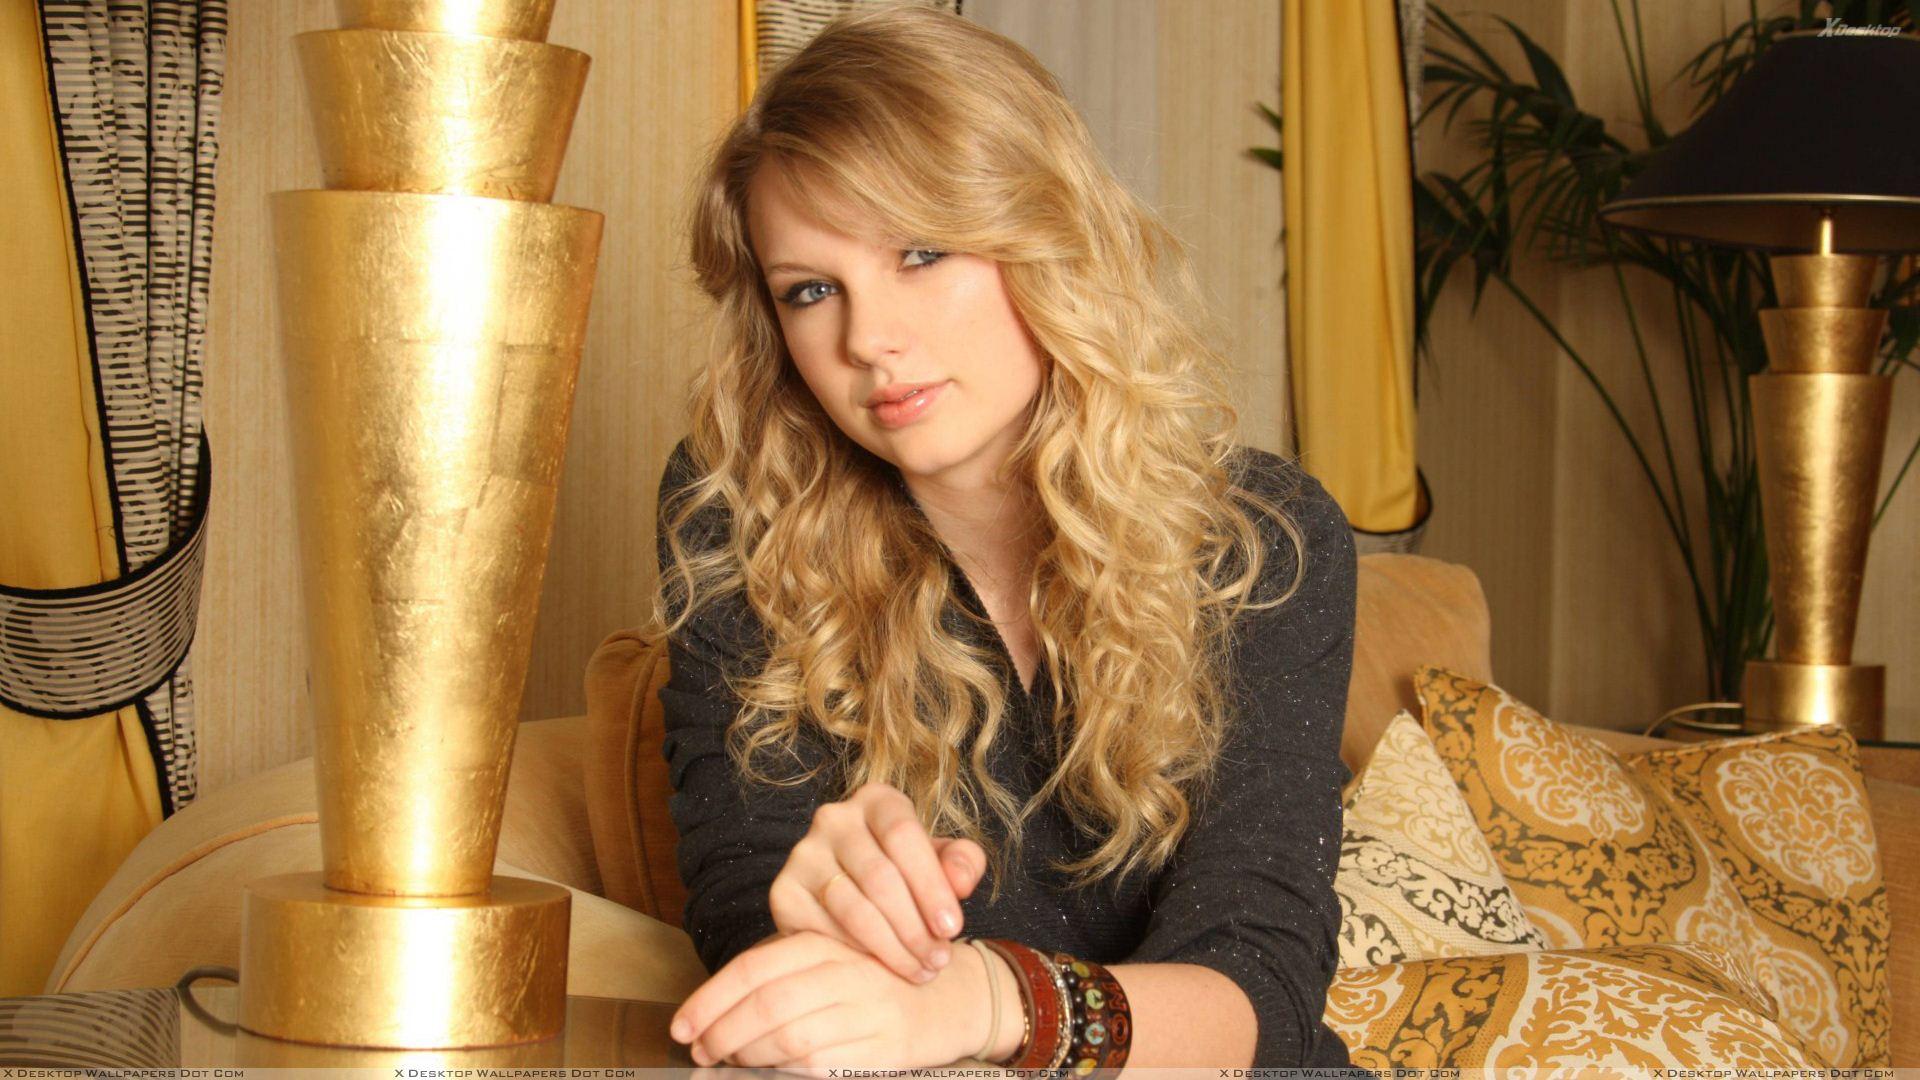 Taylor Swift Sitting In Black Dress Looking Front Photohoot Wallpaper